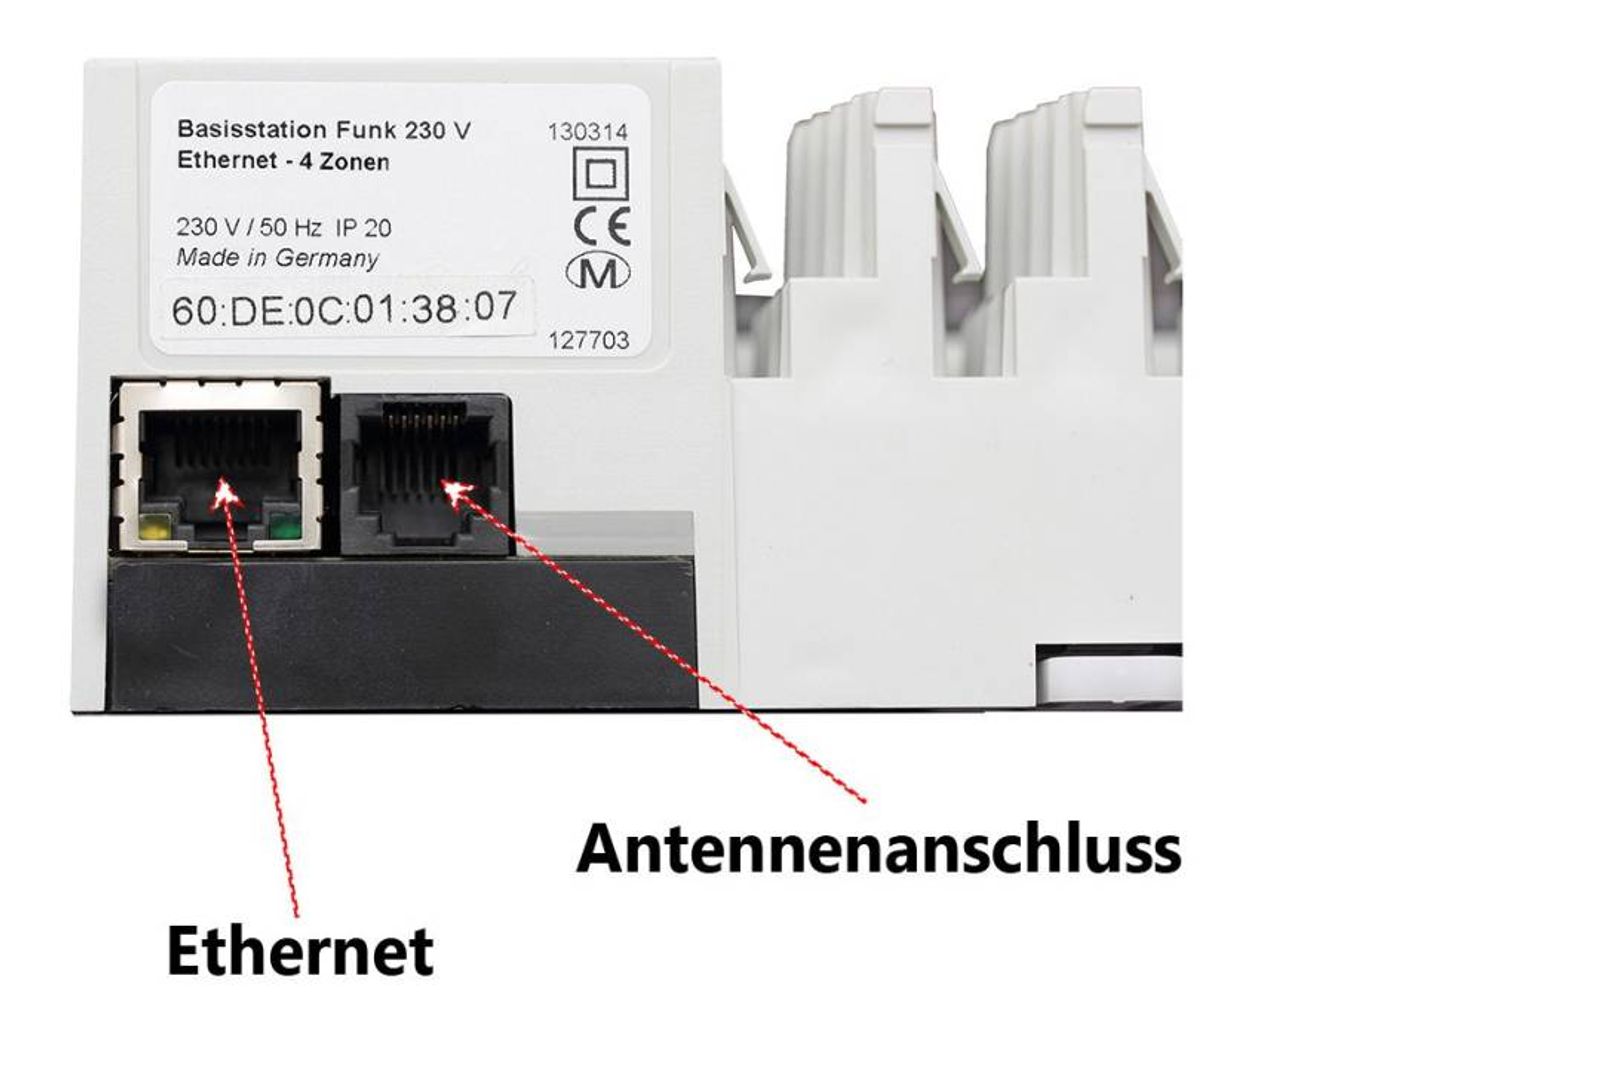 Möhlenhoff Anschlussleiste Alpha 2 Basisstation Funk 230 V, 4 Zonen, Ethernet